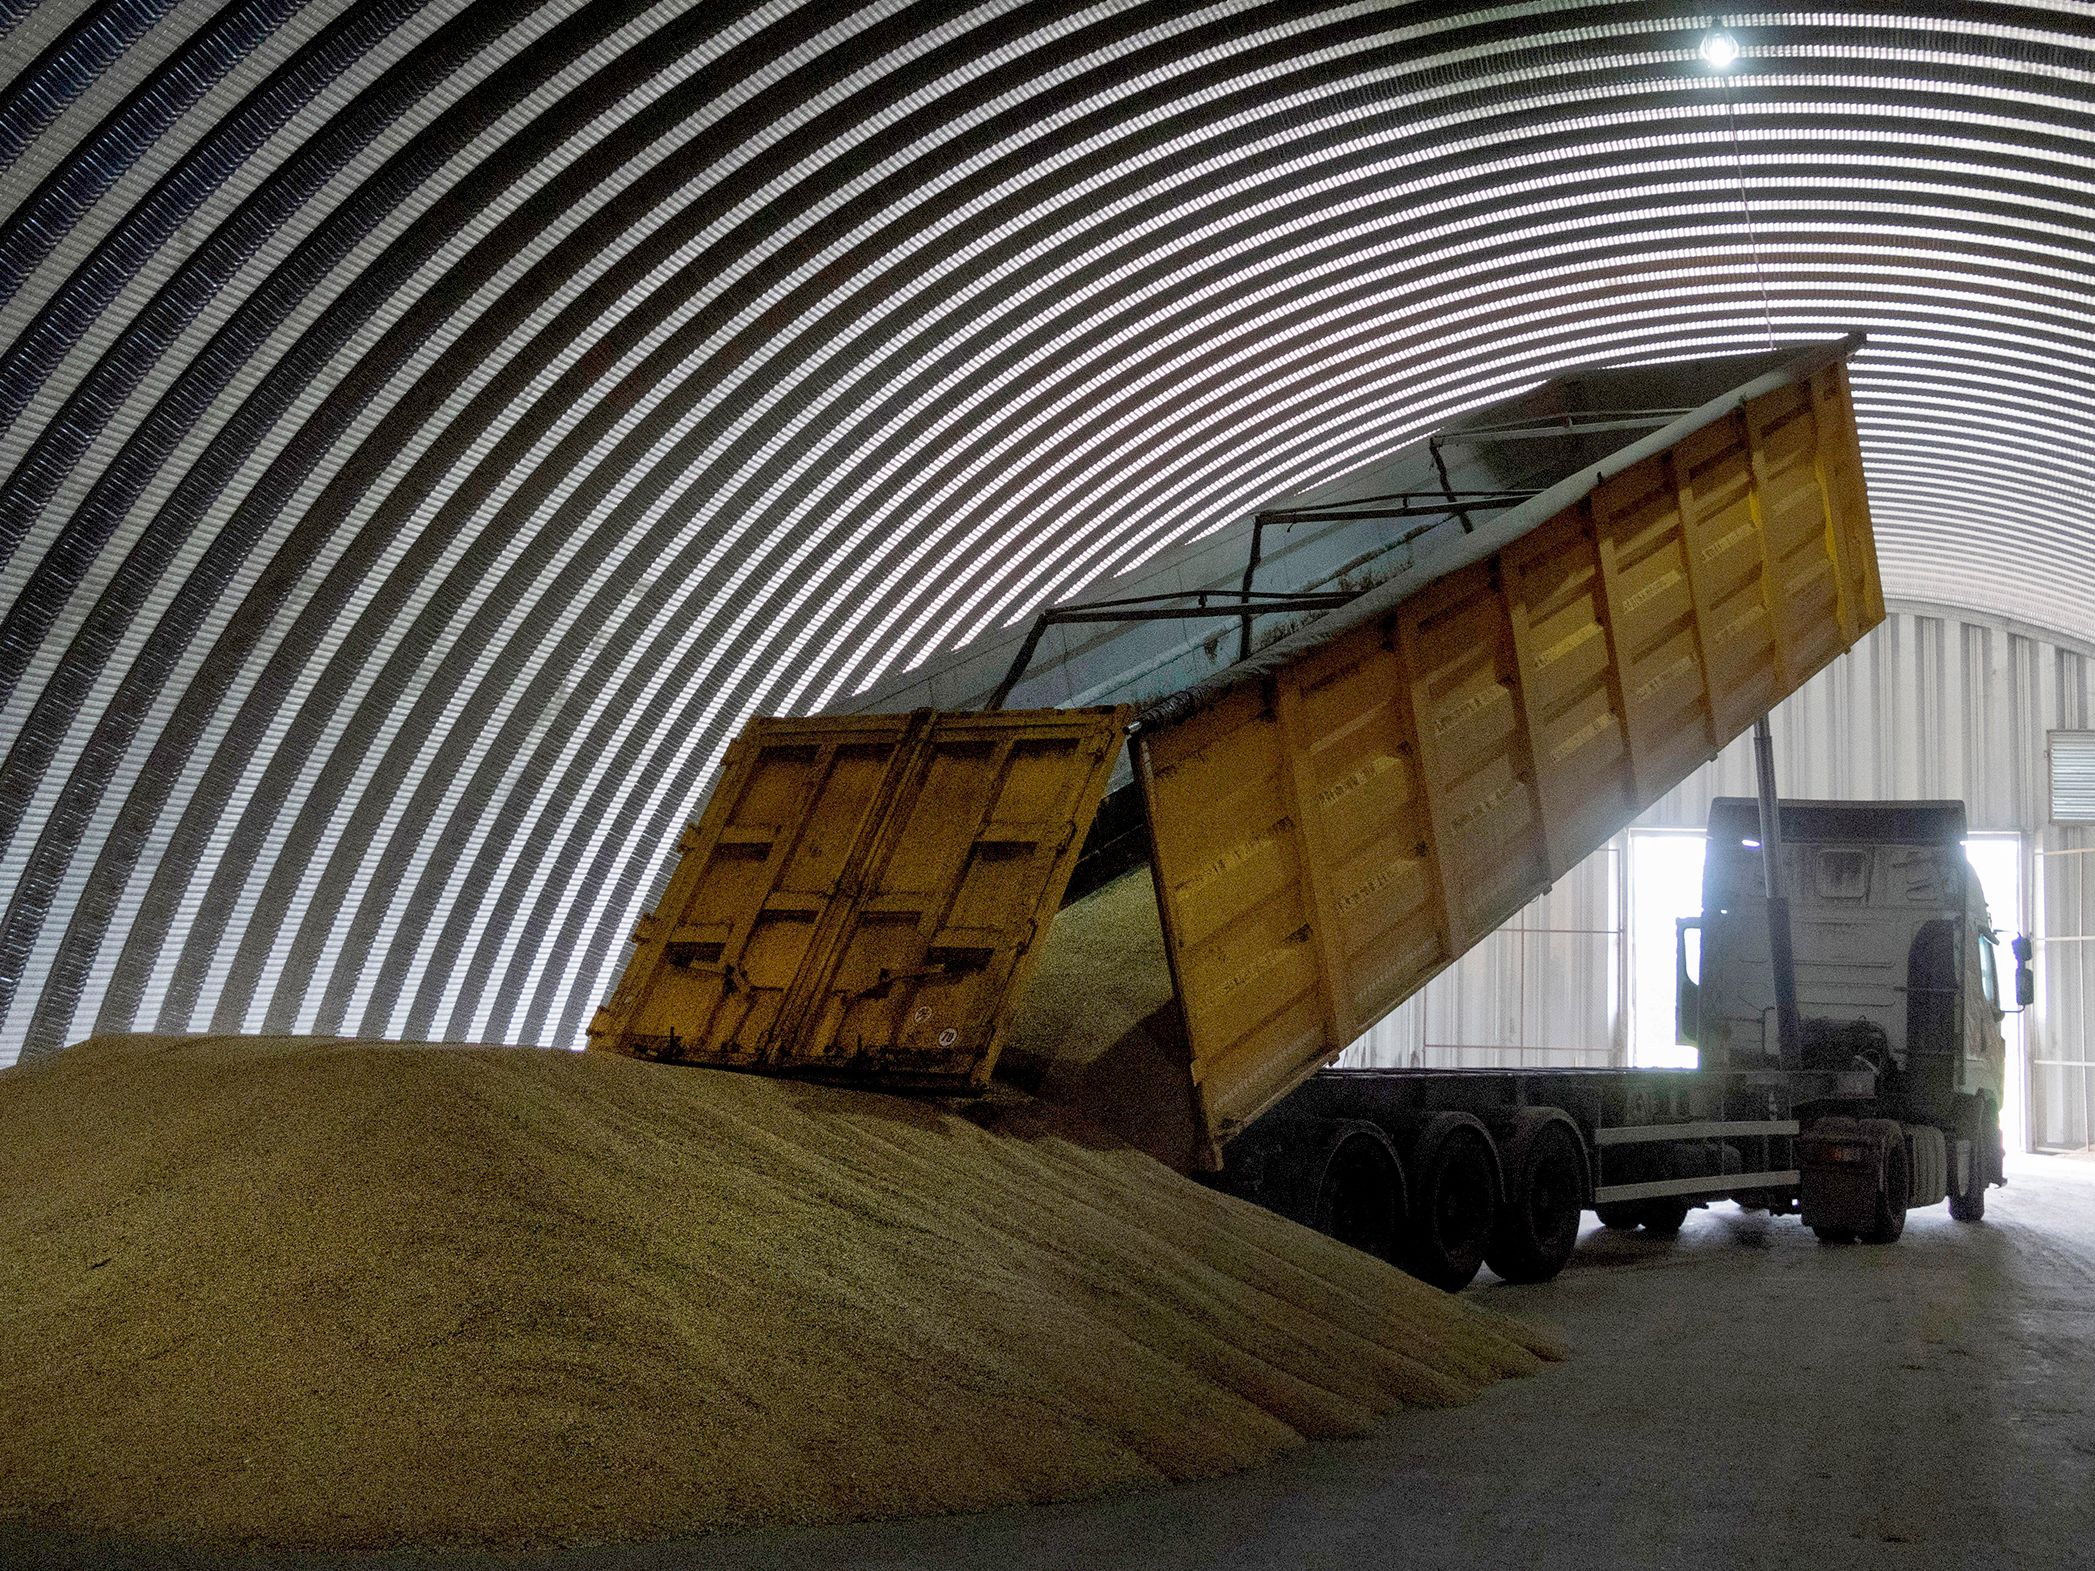 Poland And Hungary Impose Ban On Ukrainian Grain And Food Imports